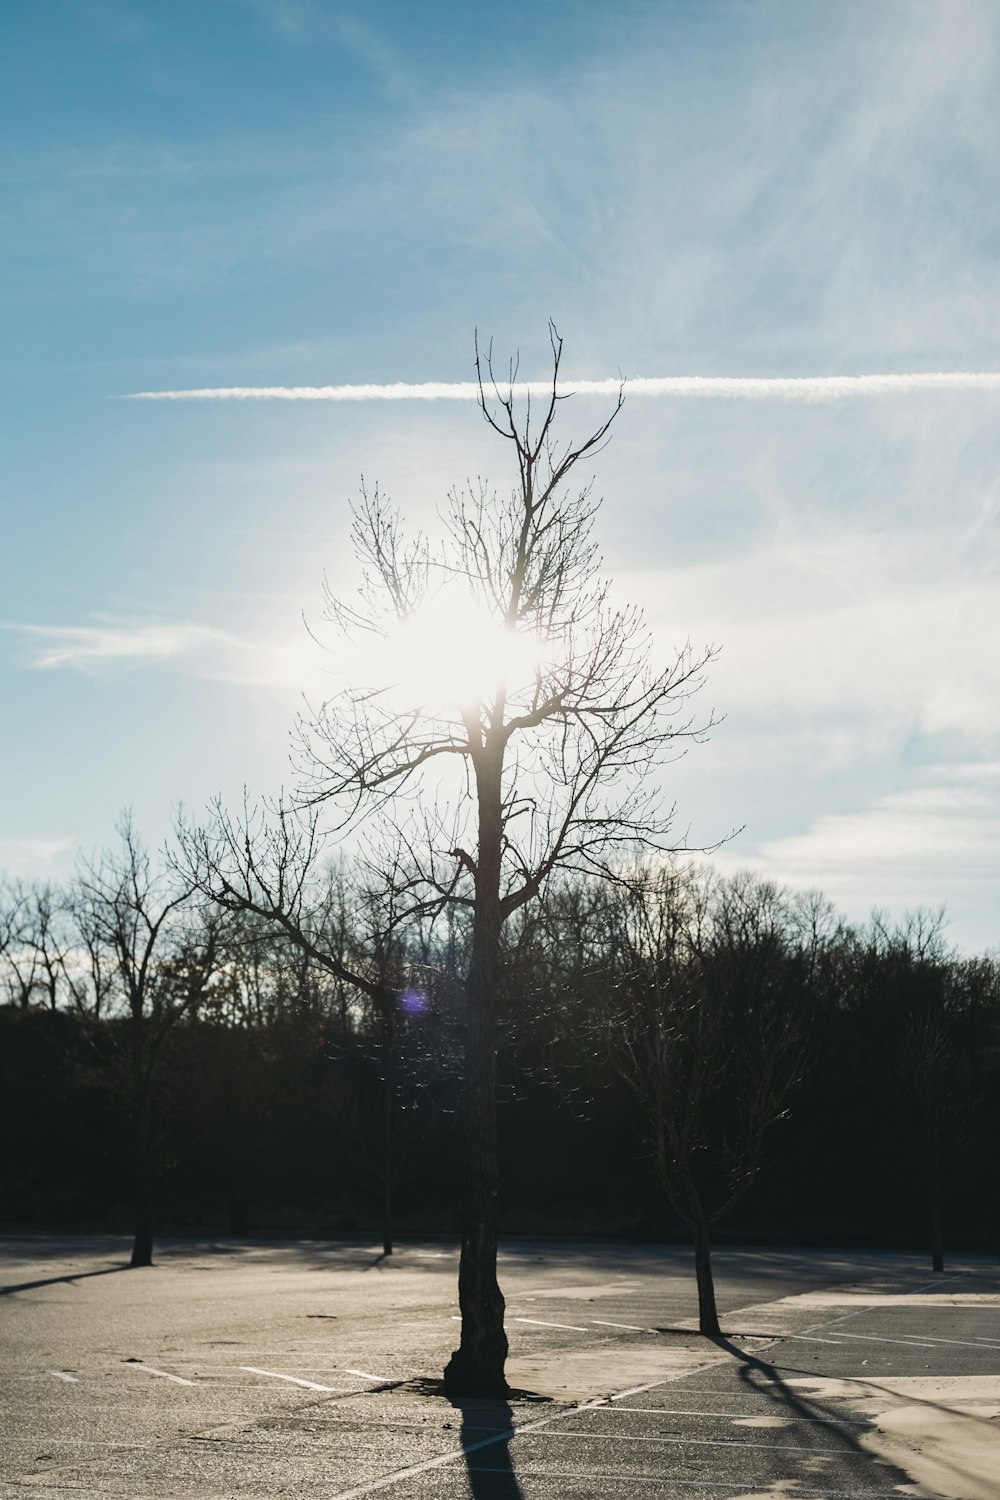 bare trees under blue sky during daytime